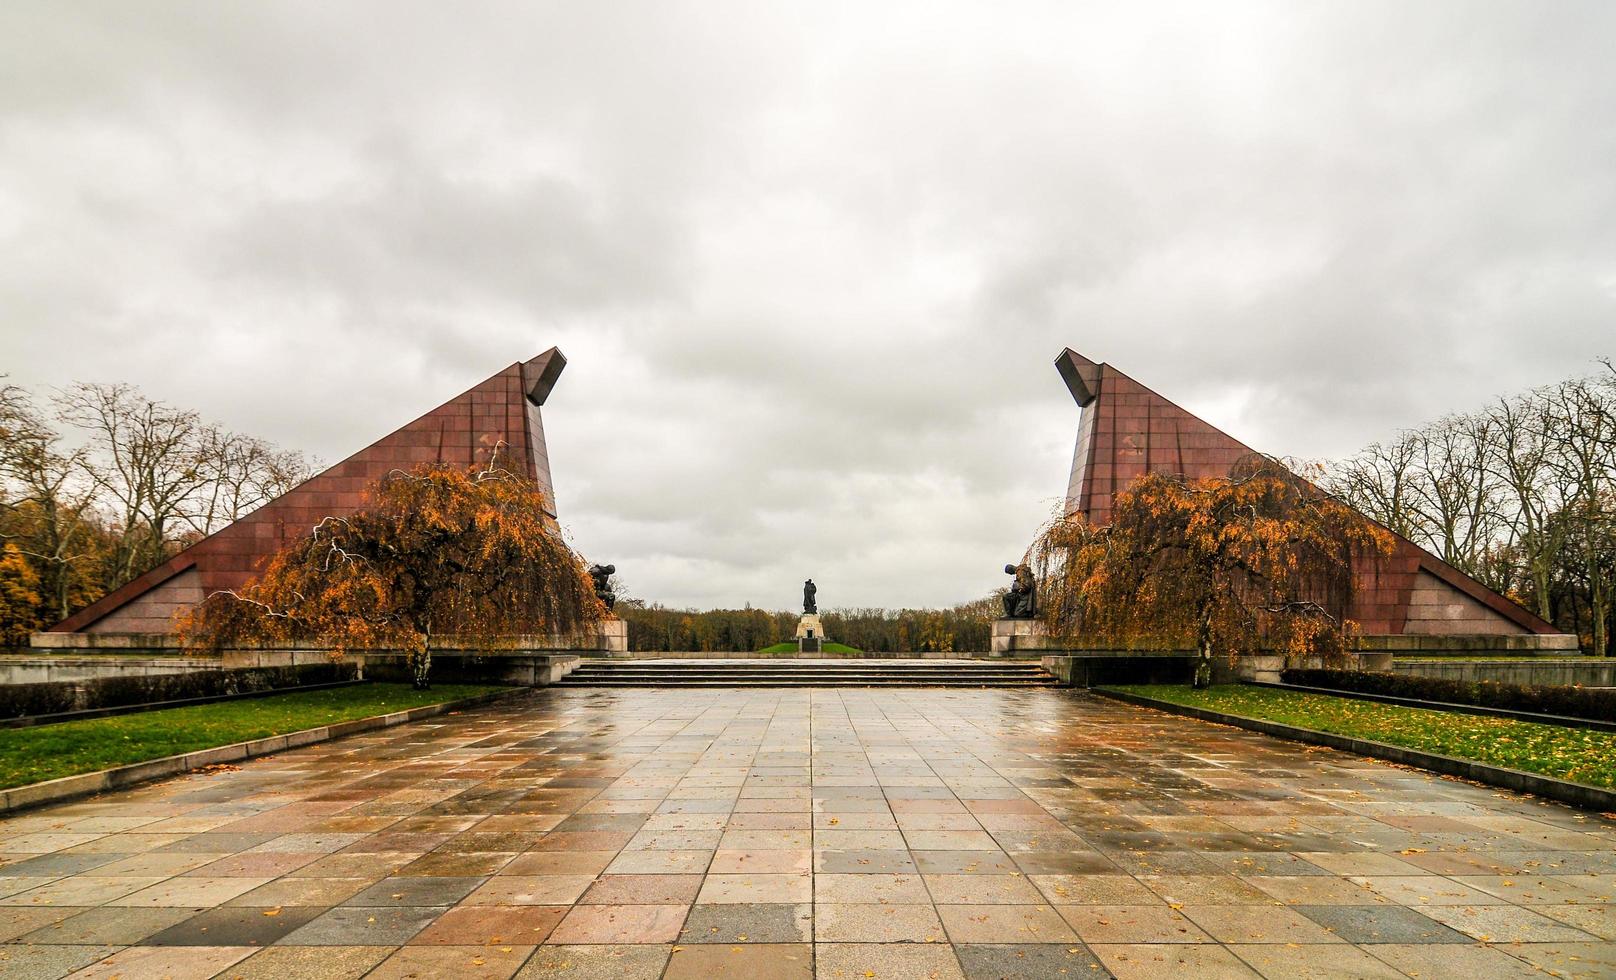 Soviet War Memorial in Treptower Park, Berlin, Germany Panorama photo